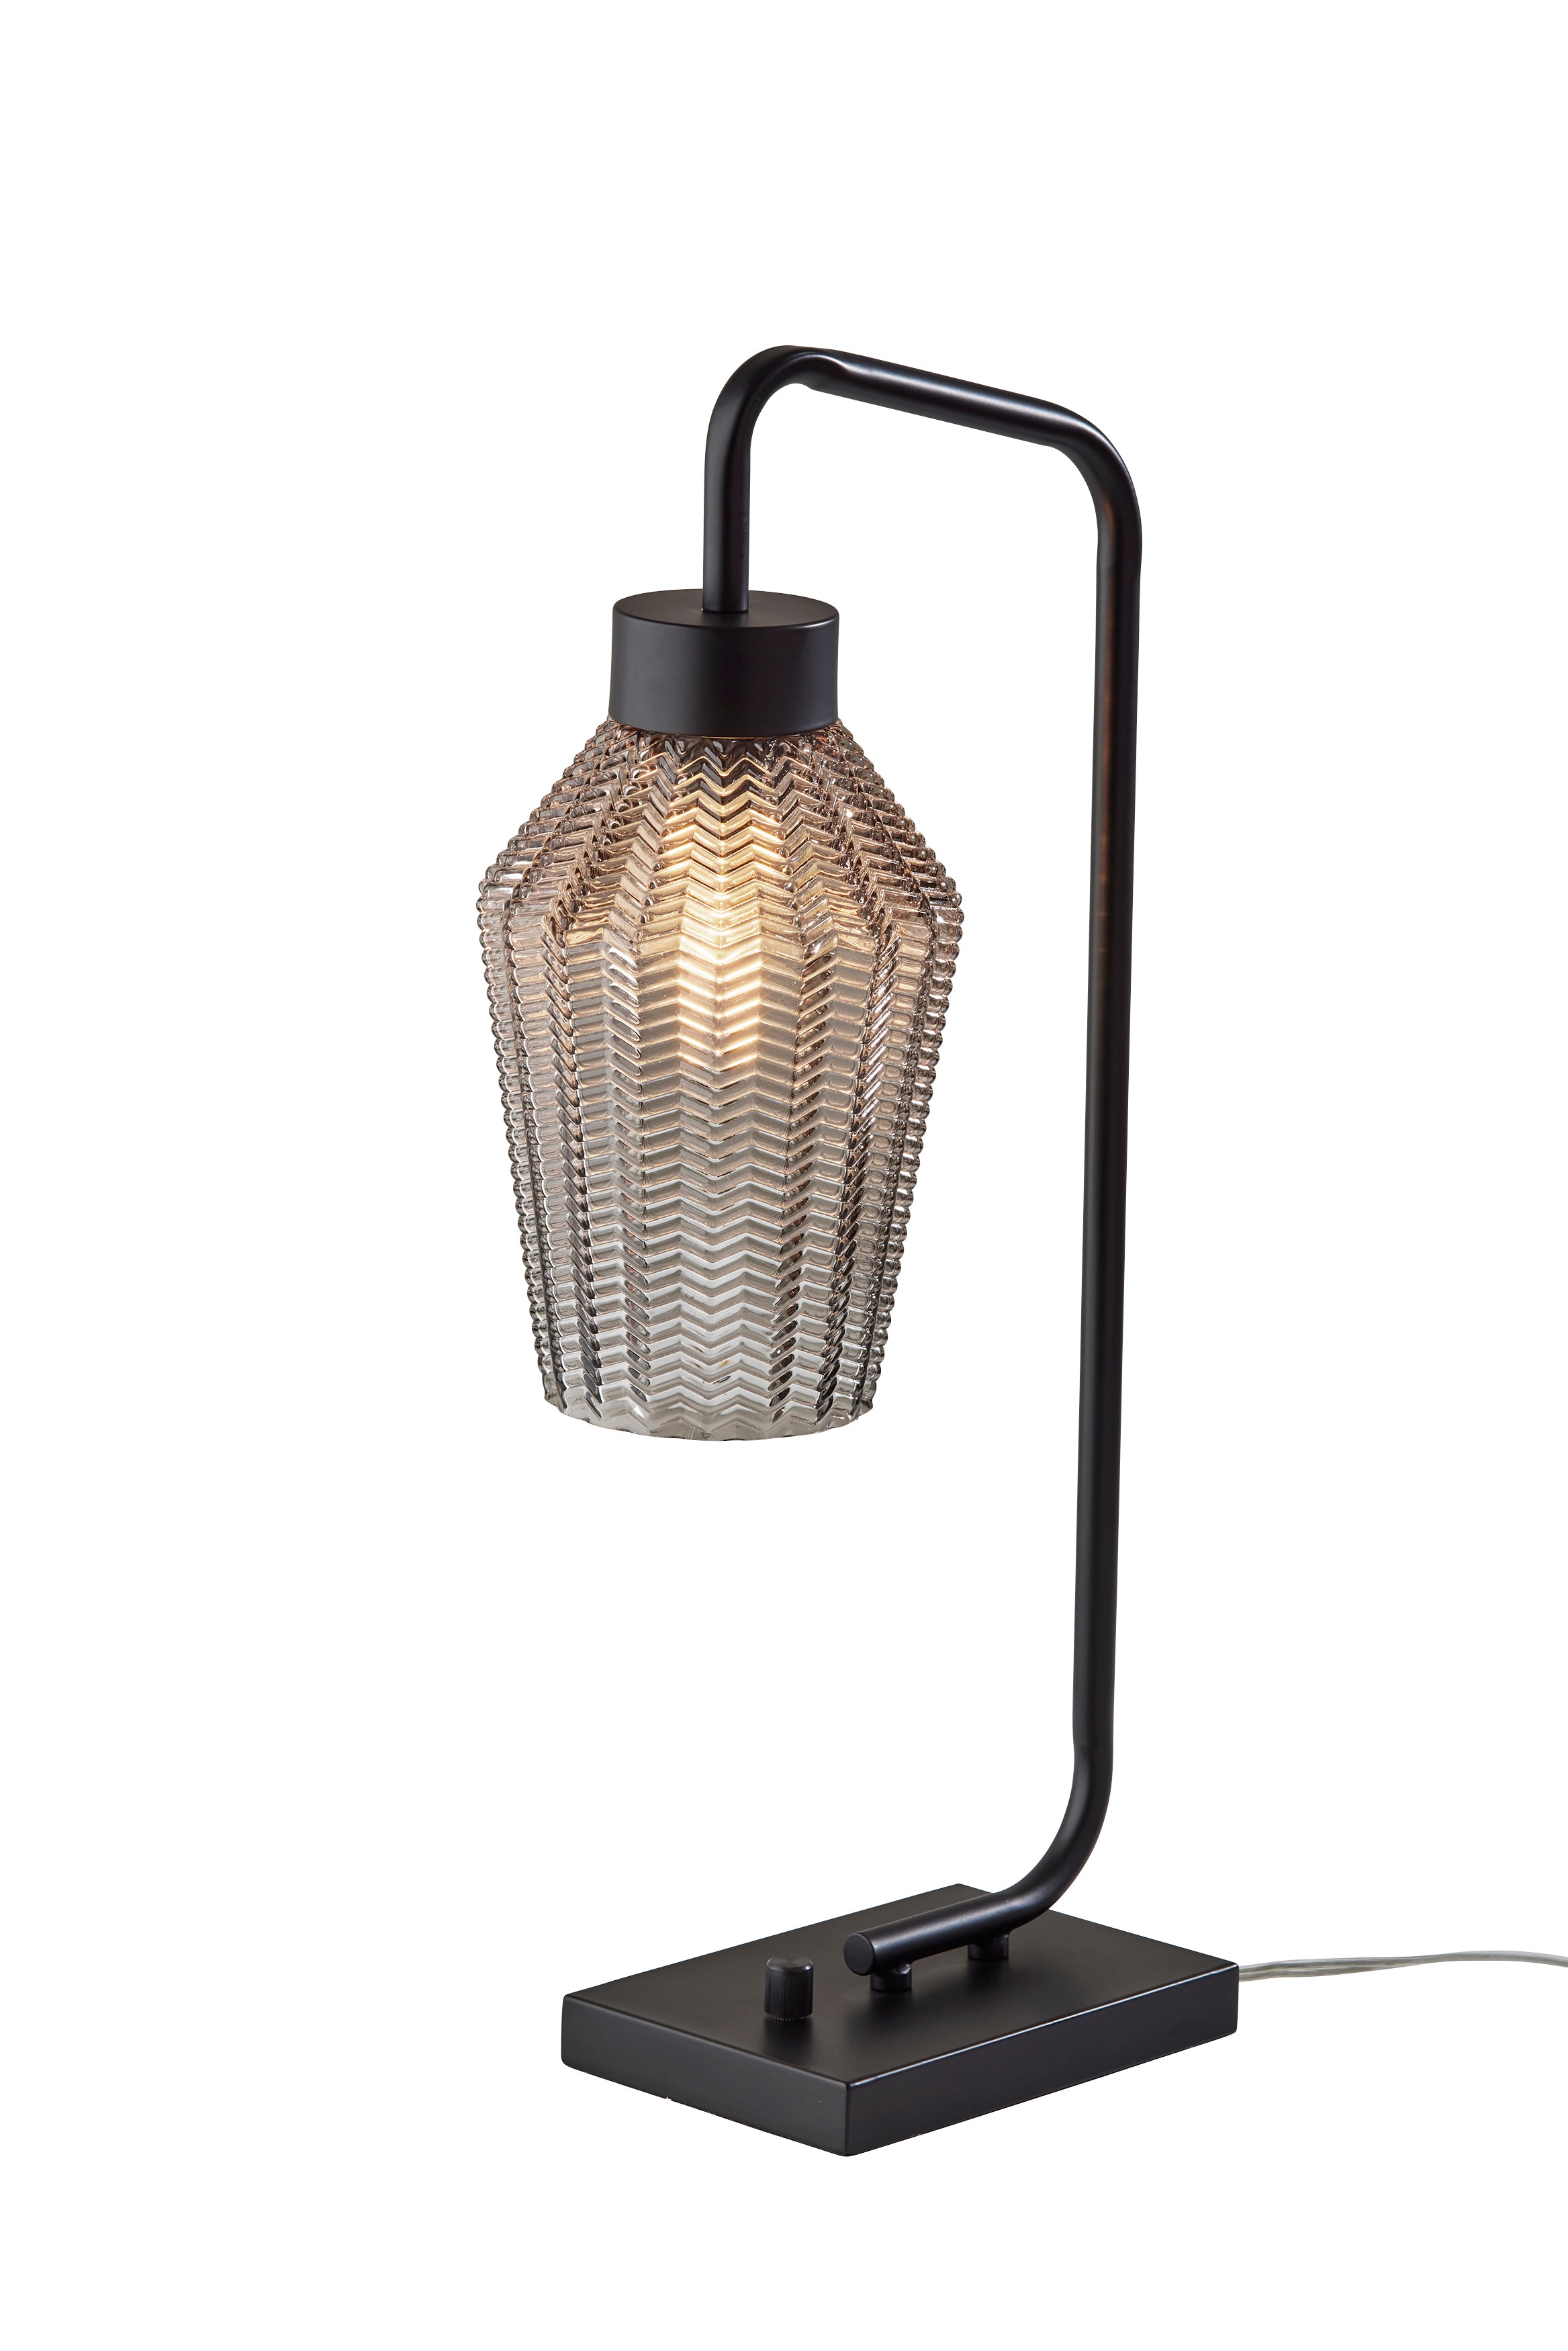 BELFRY Lampe sur table Noir - 3878-01 | ADESSO